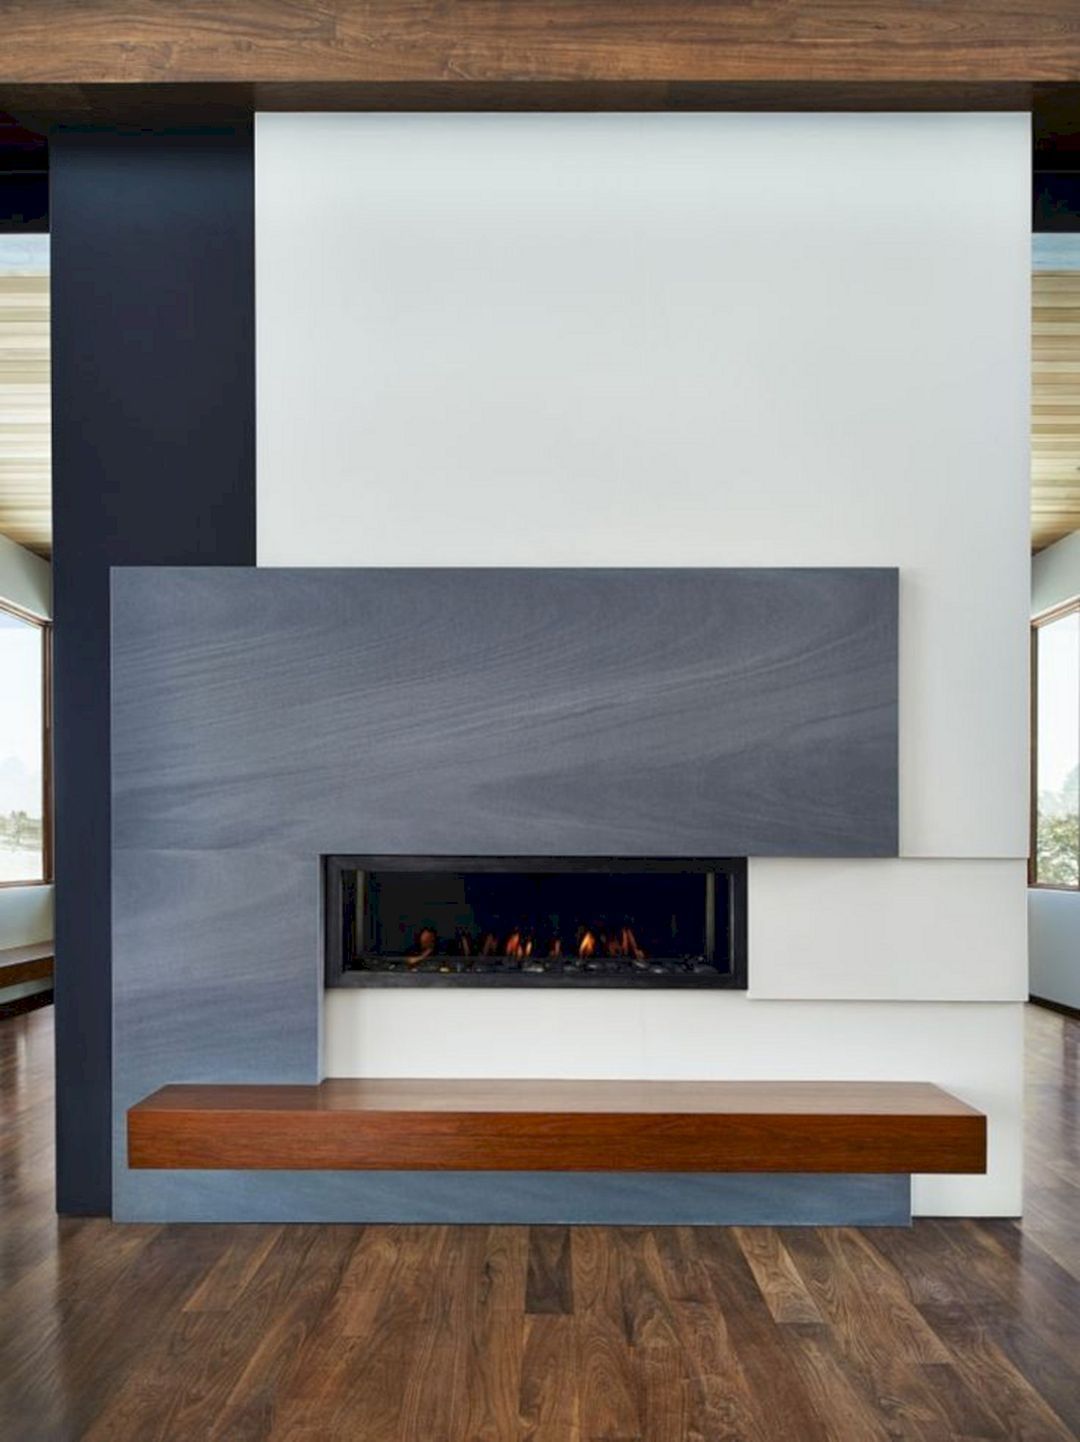 Contemporary Fireplace Mantel Design Ideas Unique Incredible Contemporary Fireplace Design Ideas 50 Best